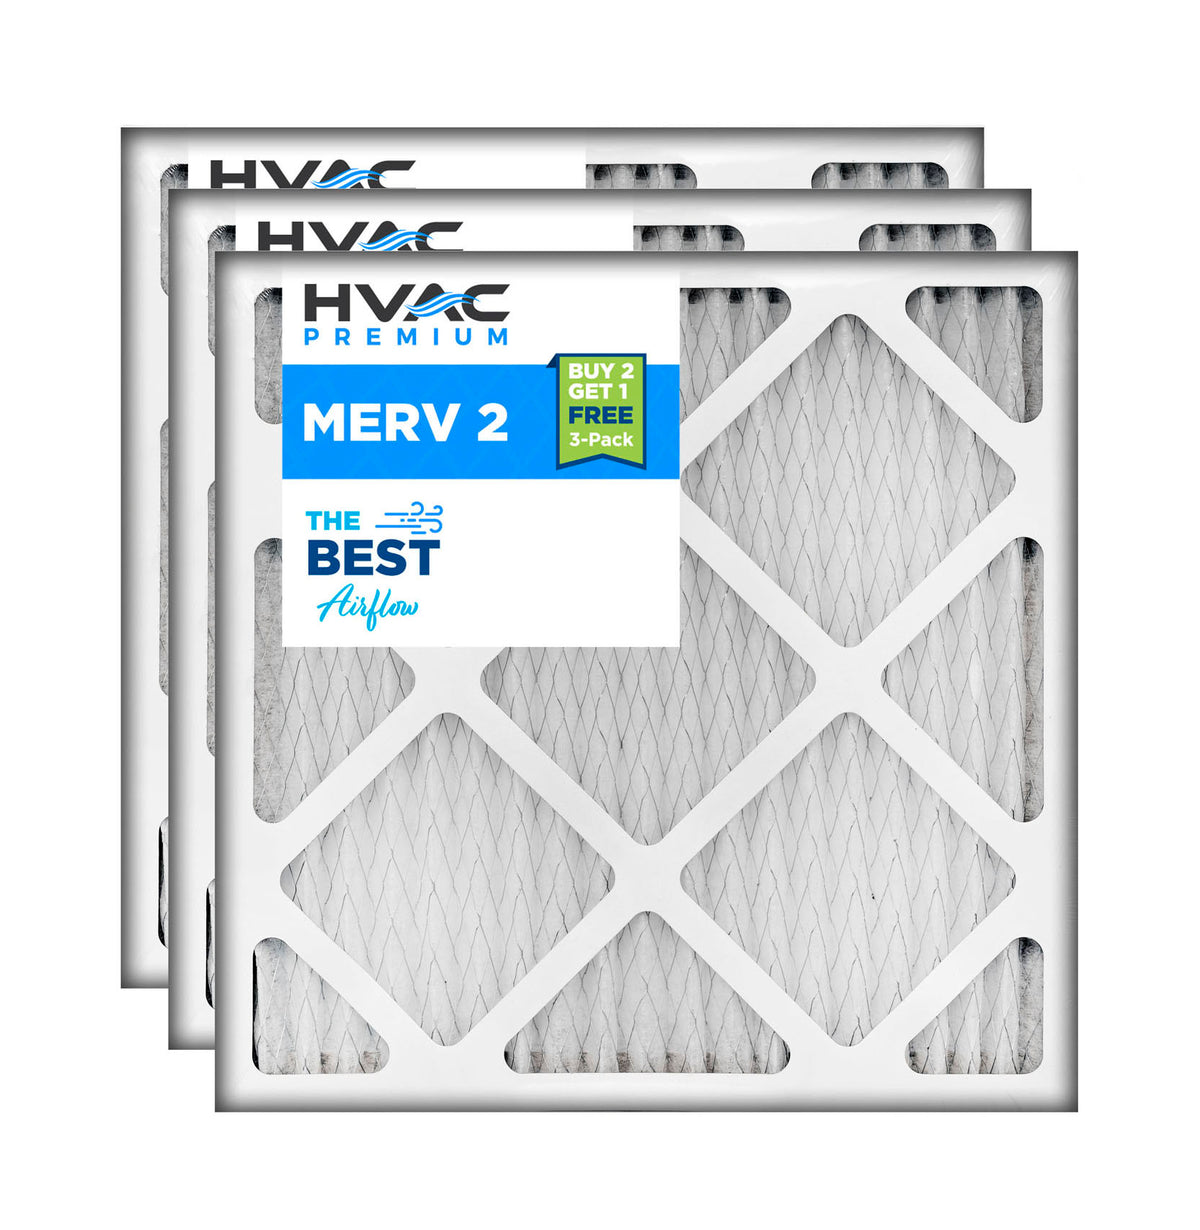 14 x 14 Merv 2 HVAC Pleated Filter, 3-Pack